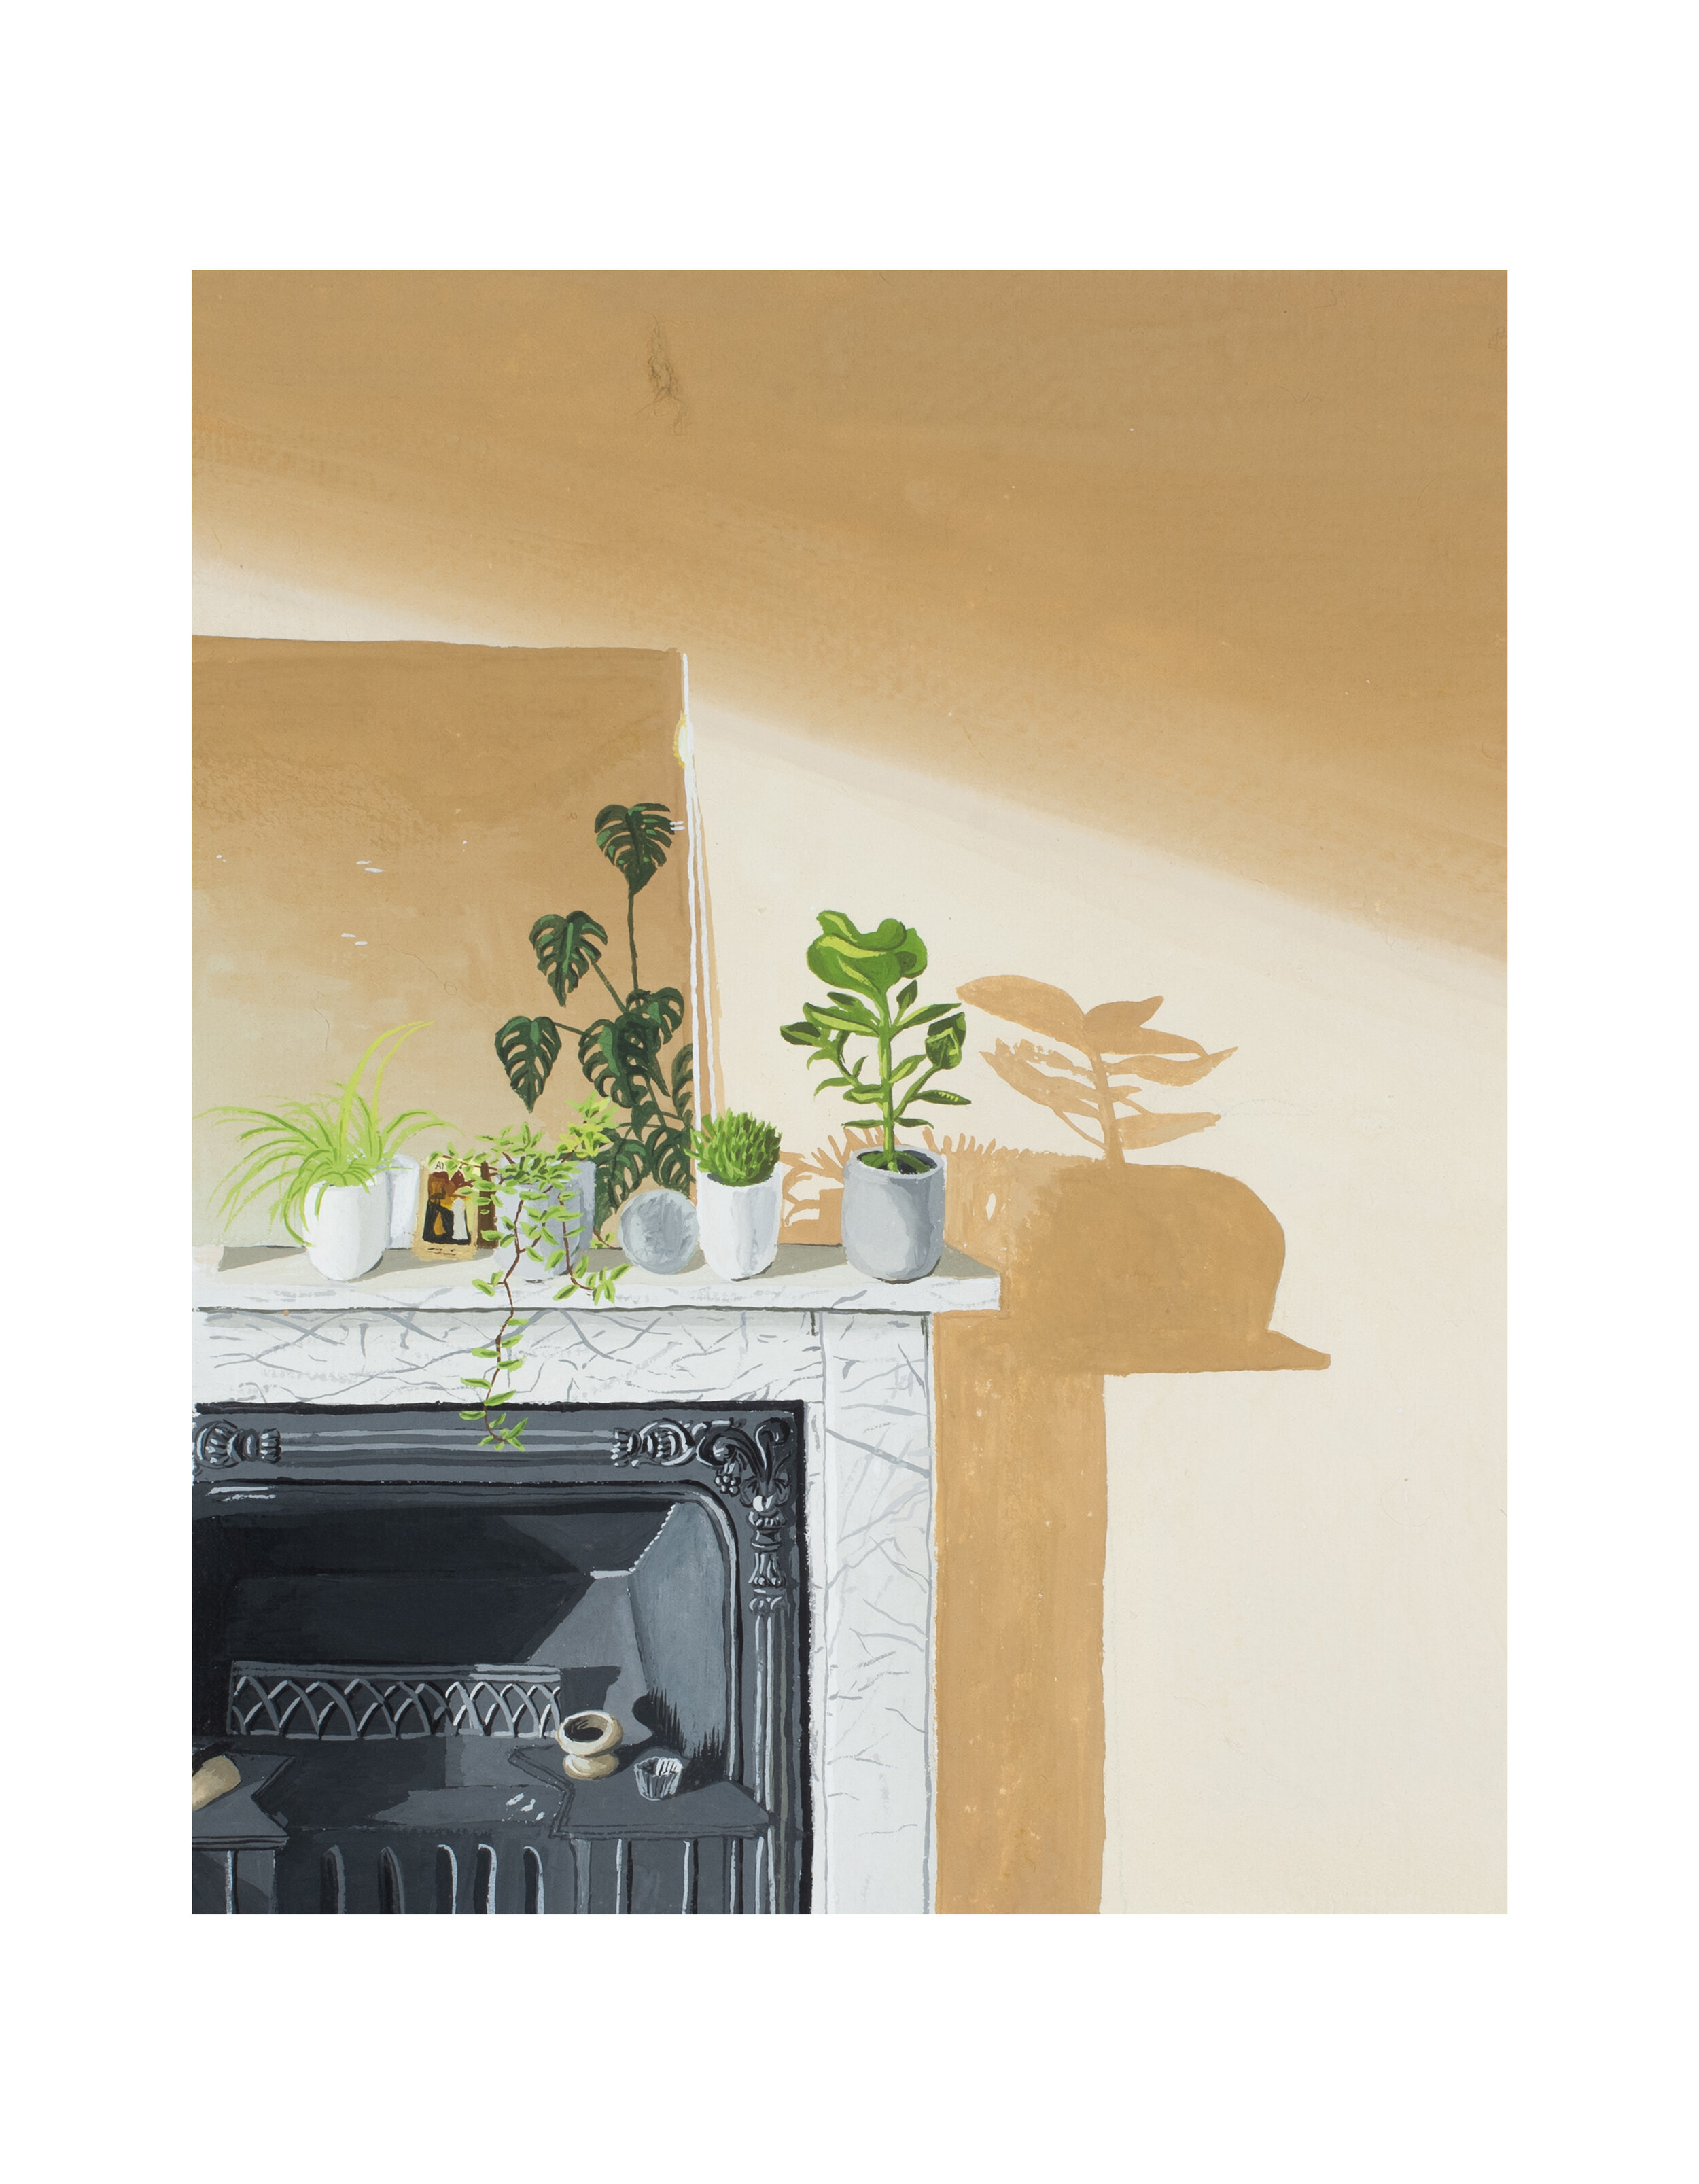 Morning Mantelpiece - Giclée Fine Art Print - Goache Painting - East Sussex